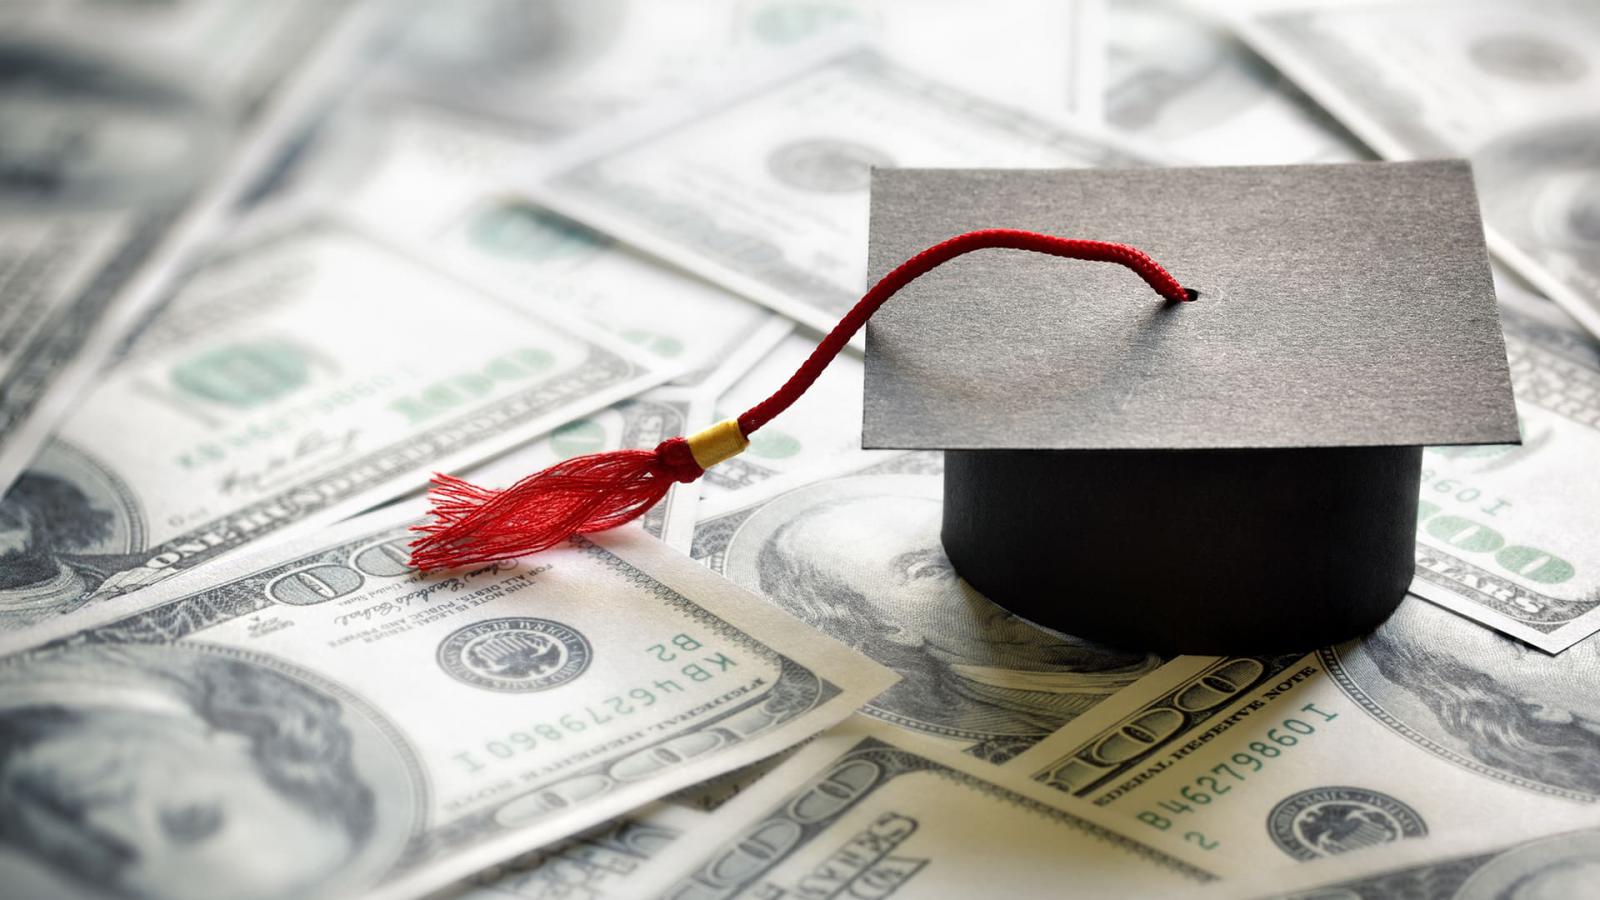 small graduation cap on cash money